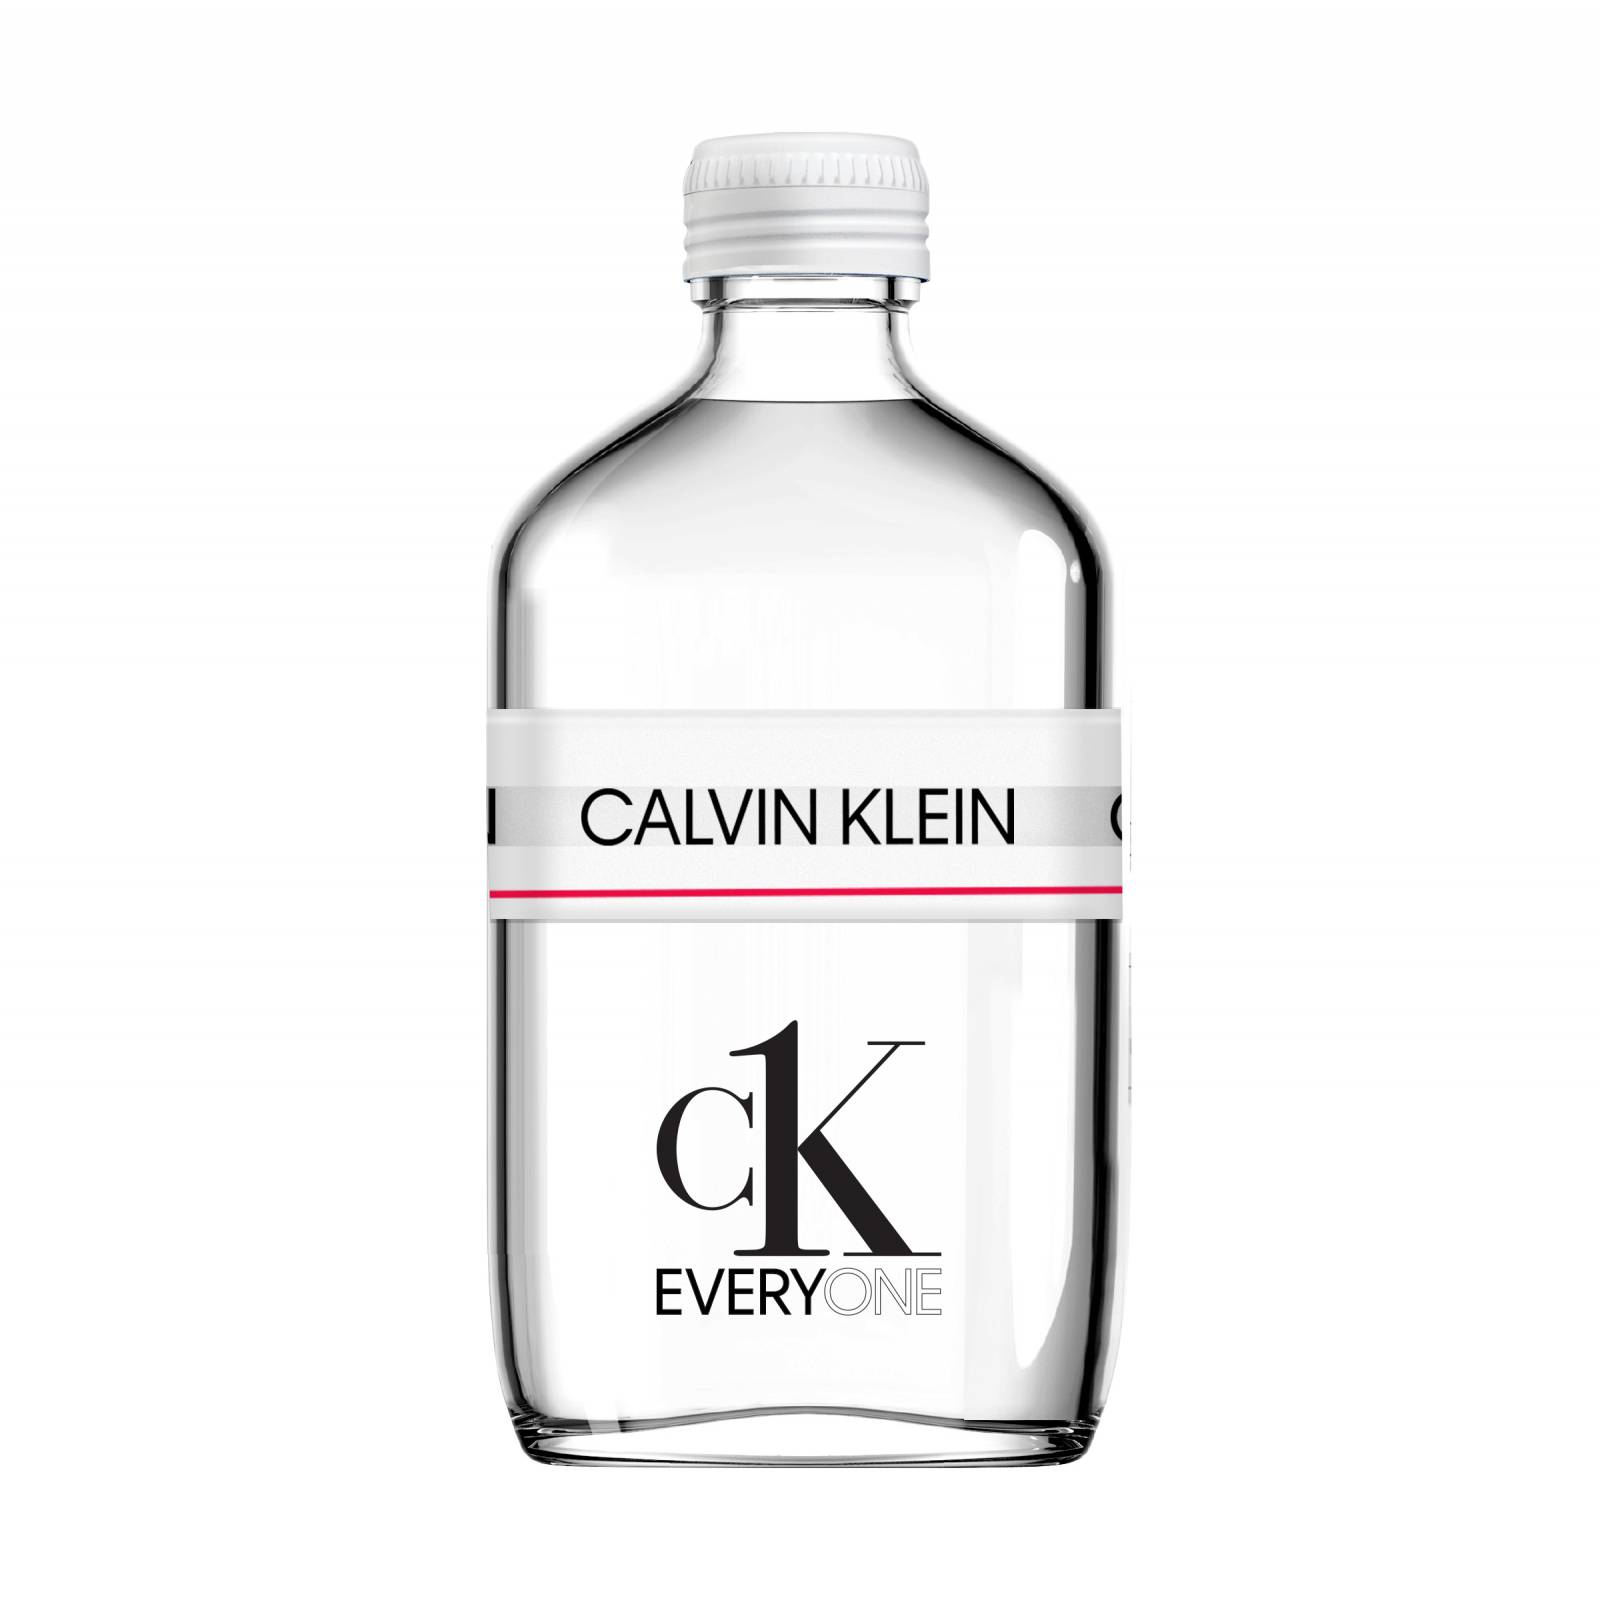 CK Everyone, Calvin Klein (fot. materiały prasowe)